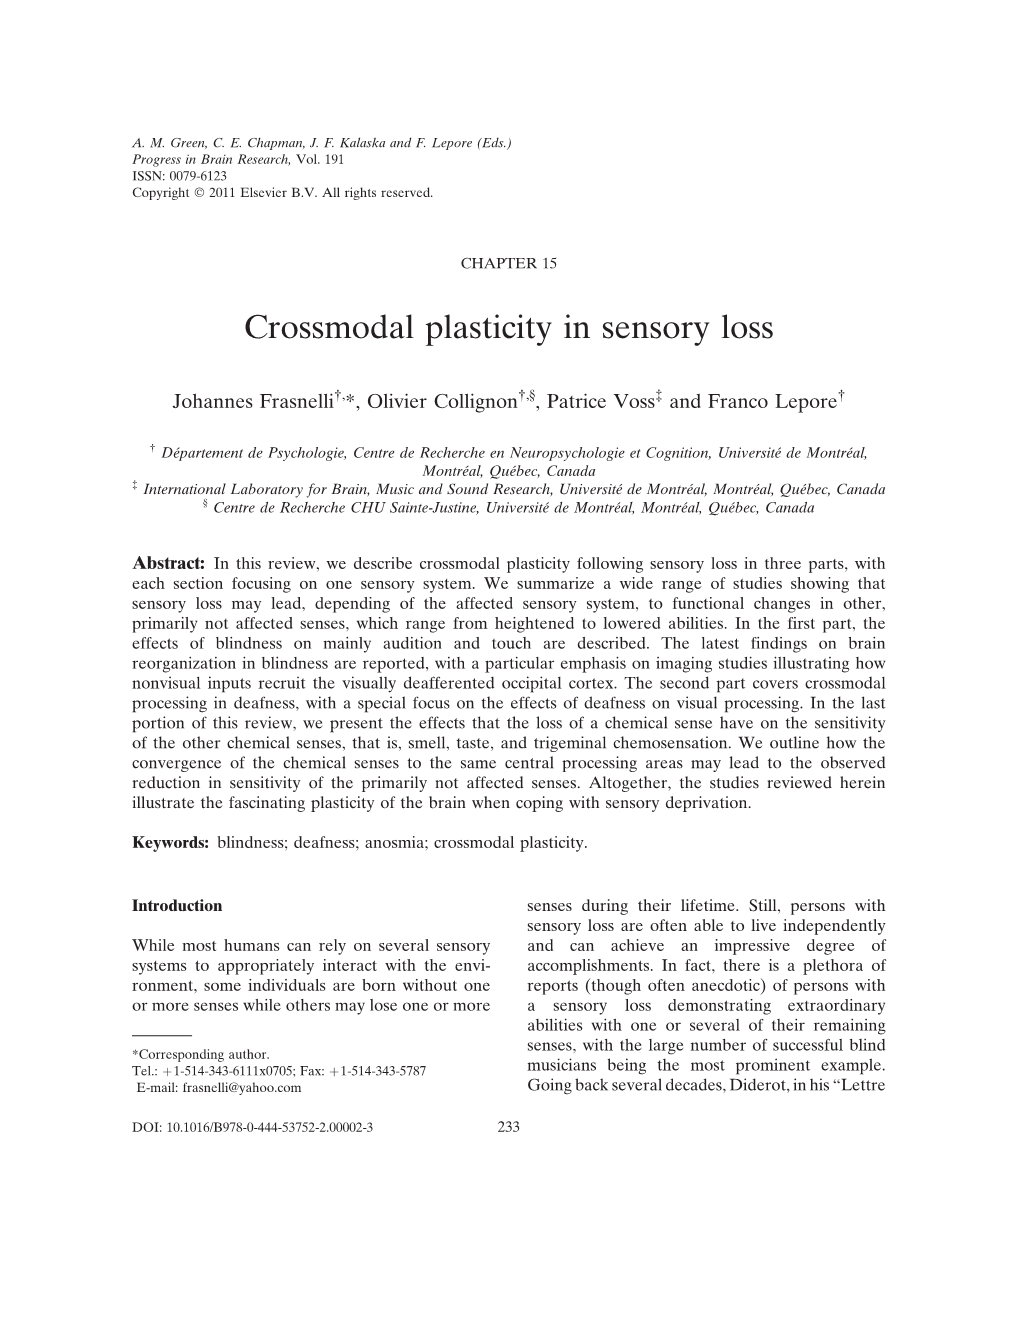 Crossmodal Plasticity in Sensory Loss